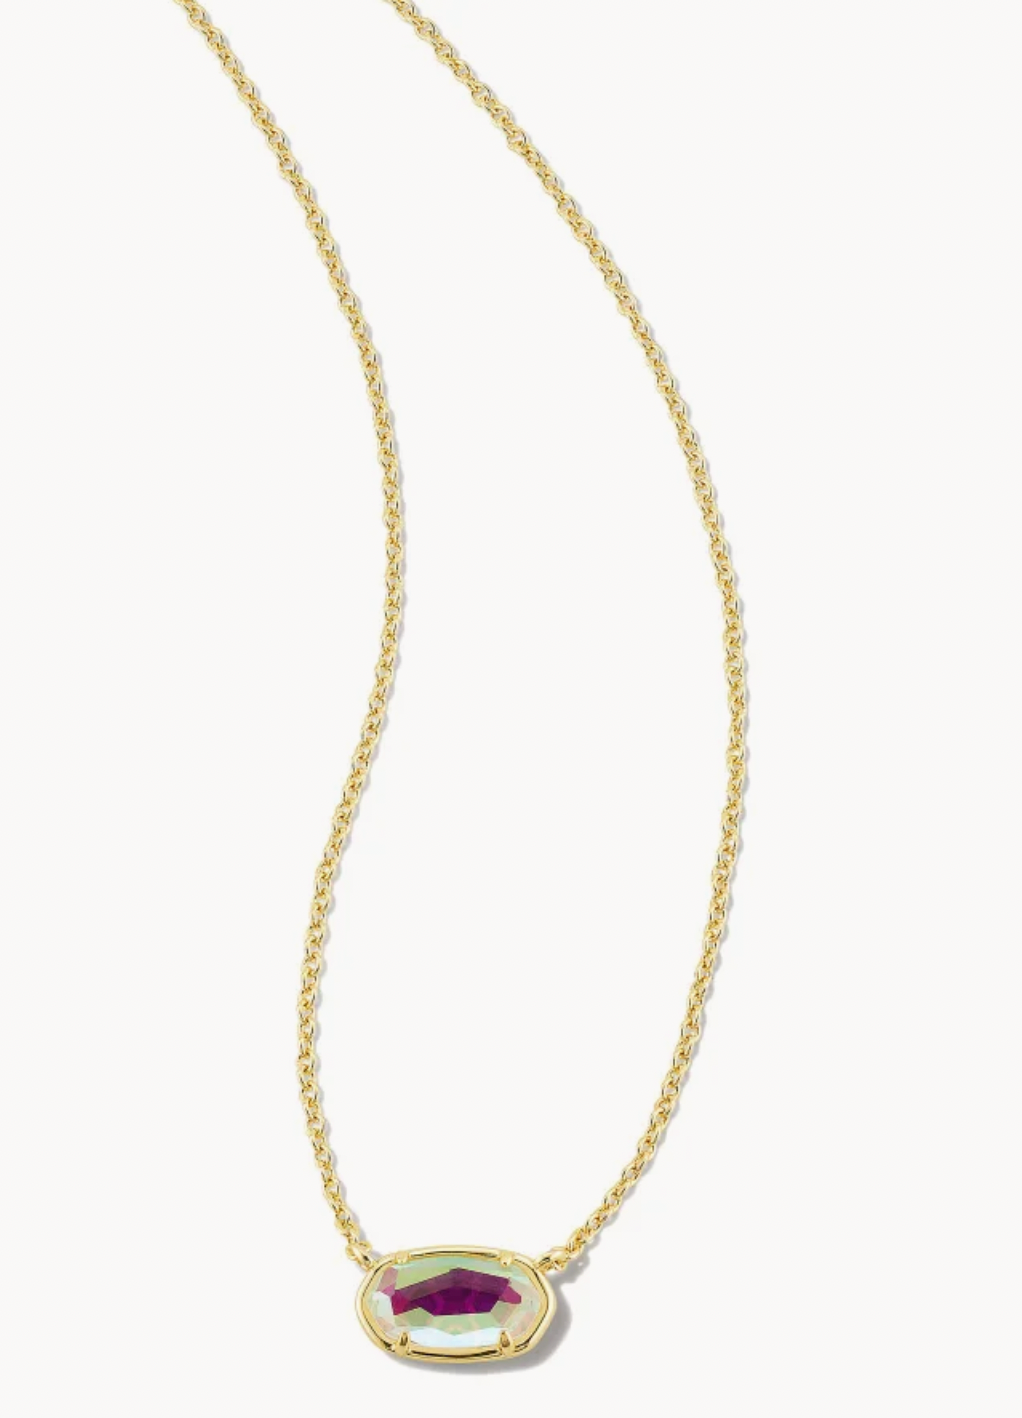 Kendra Scott Grayson Gold Pendant Necklace in Dichroic Glass